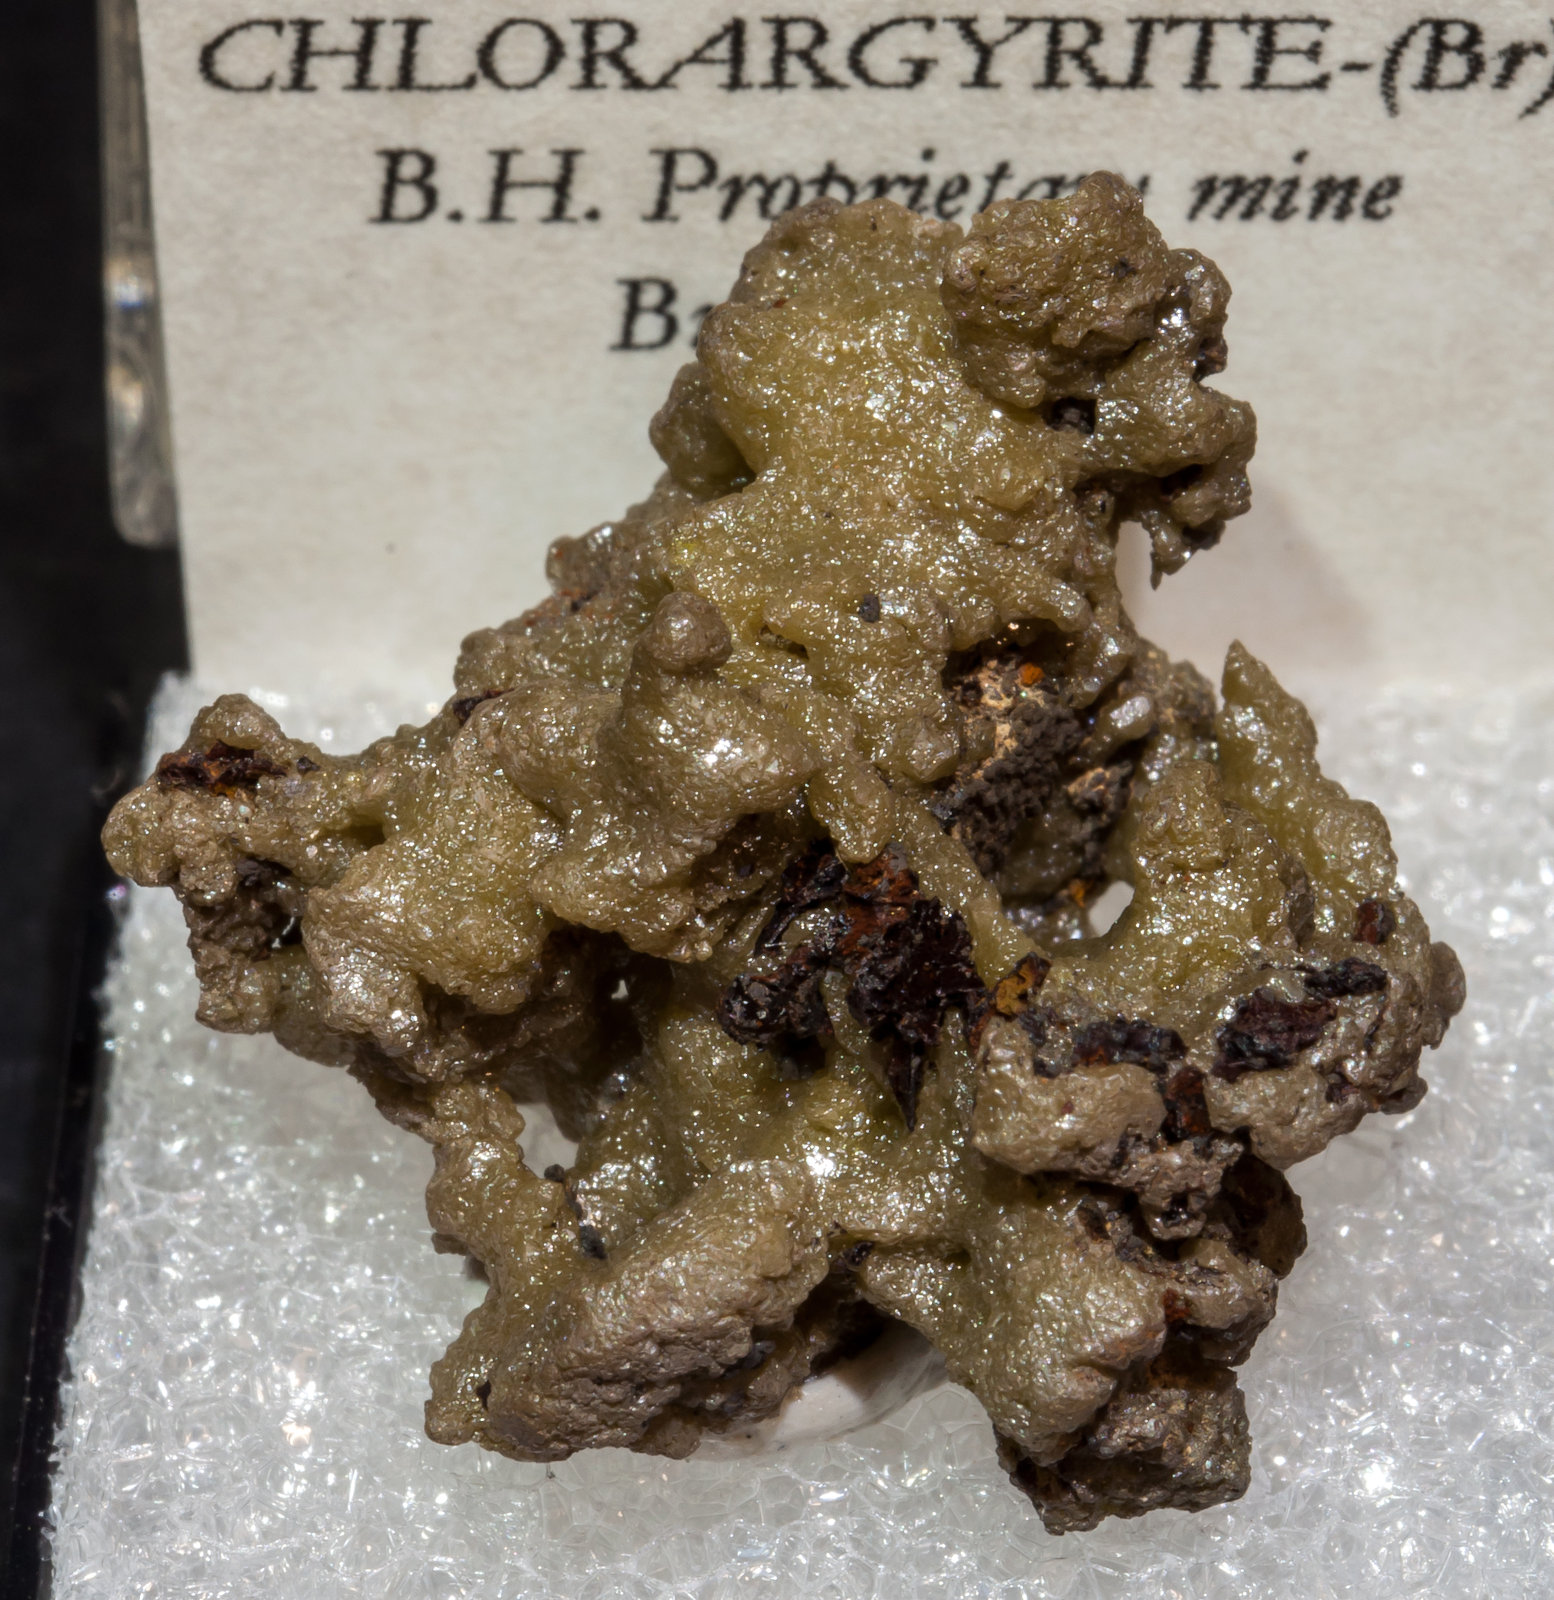 specimens/s_imagesAL5/Chlorargyrite-TQ87AL5f2.jpg